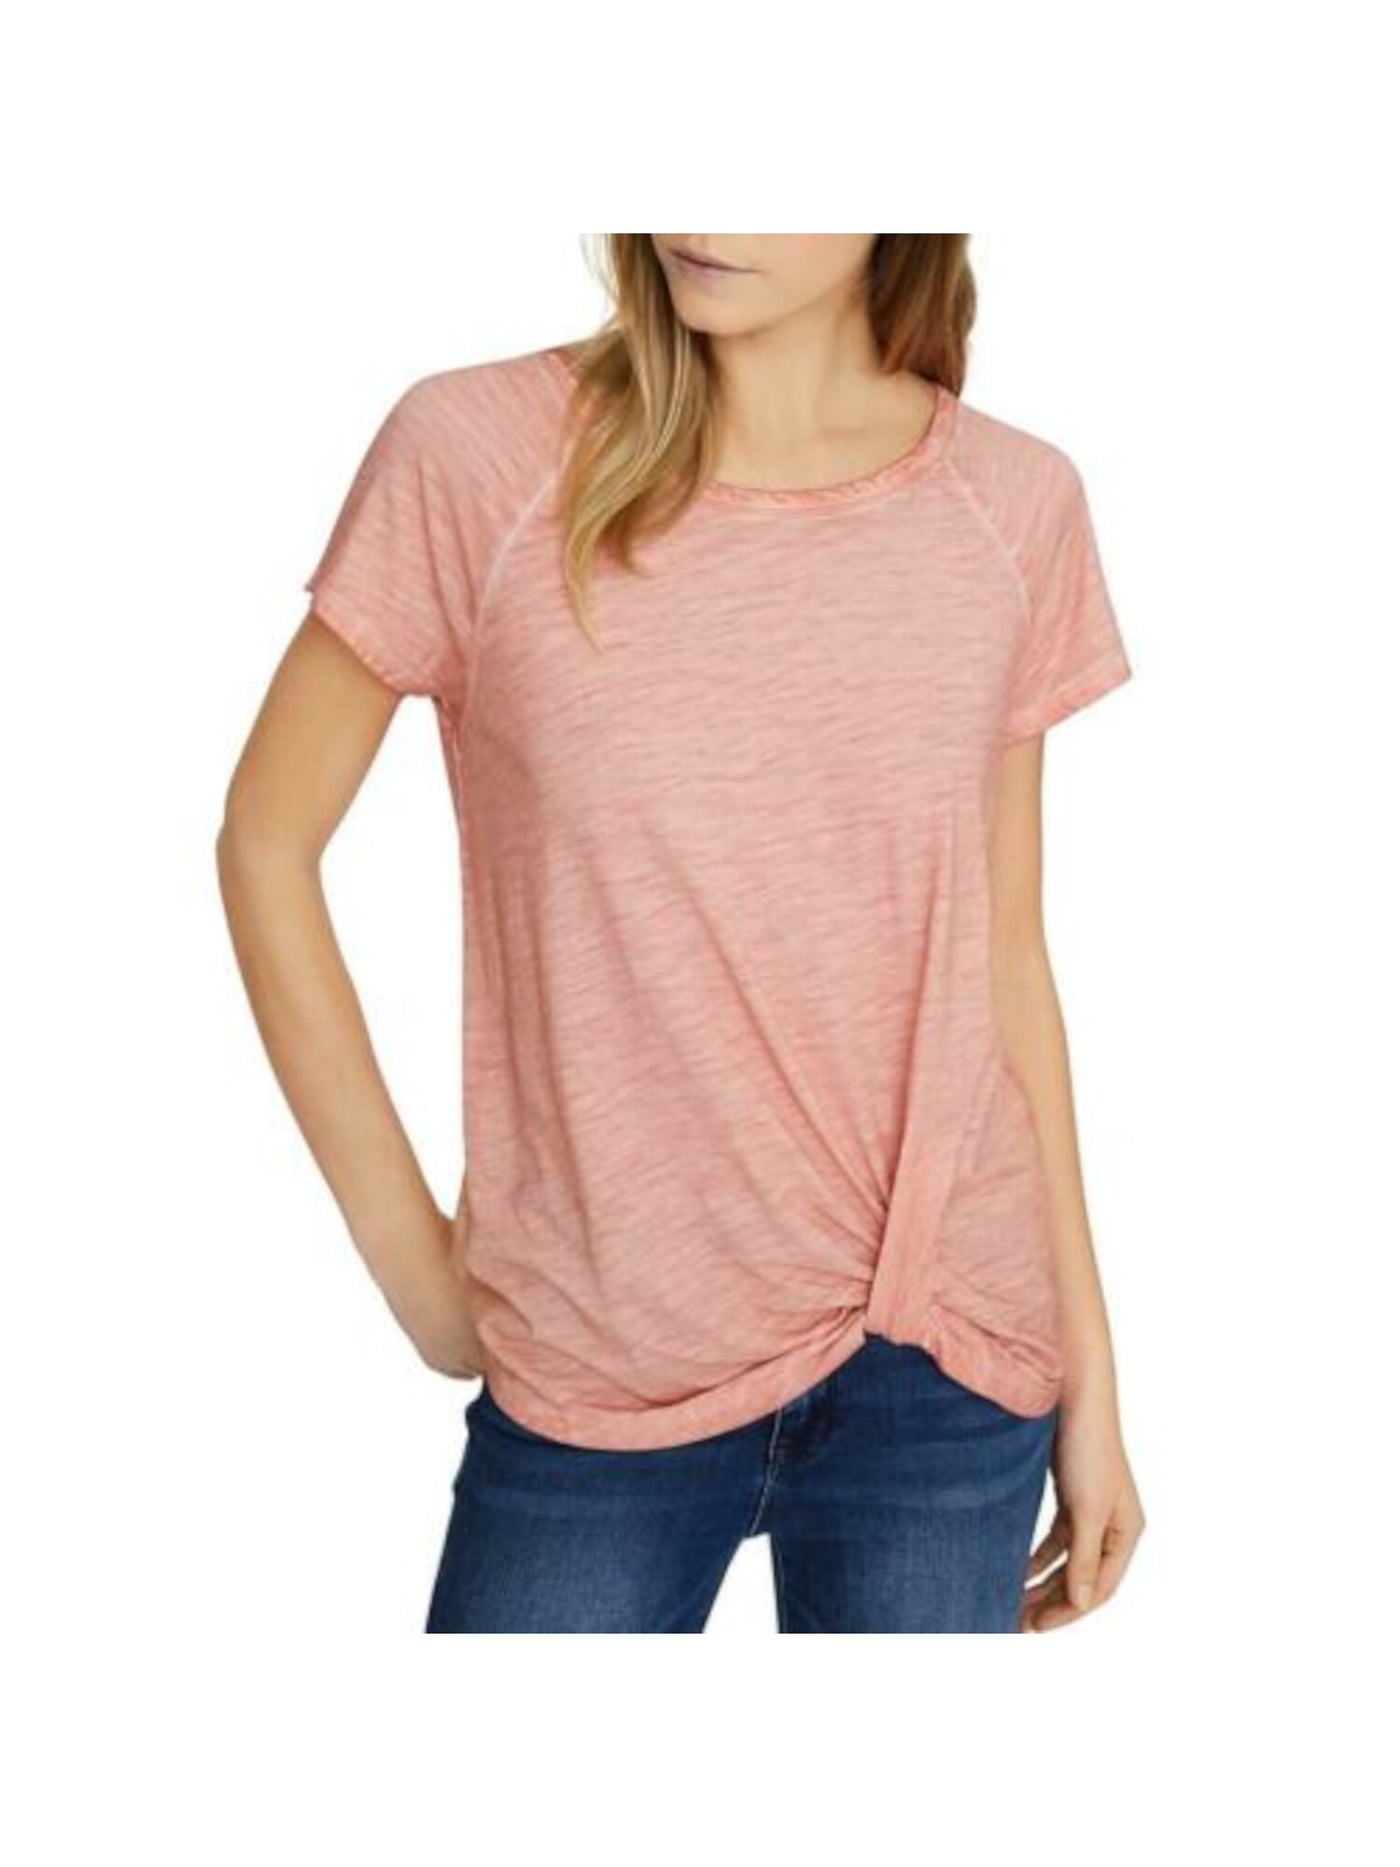 SANCTUARY Womens Pink Heather Cap Sleeve Crew Neck T-Shirt Size: S